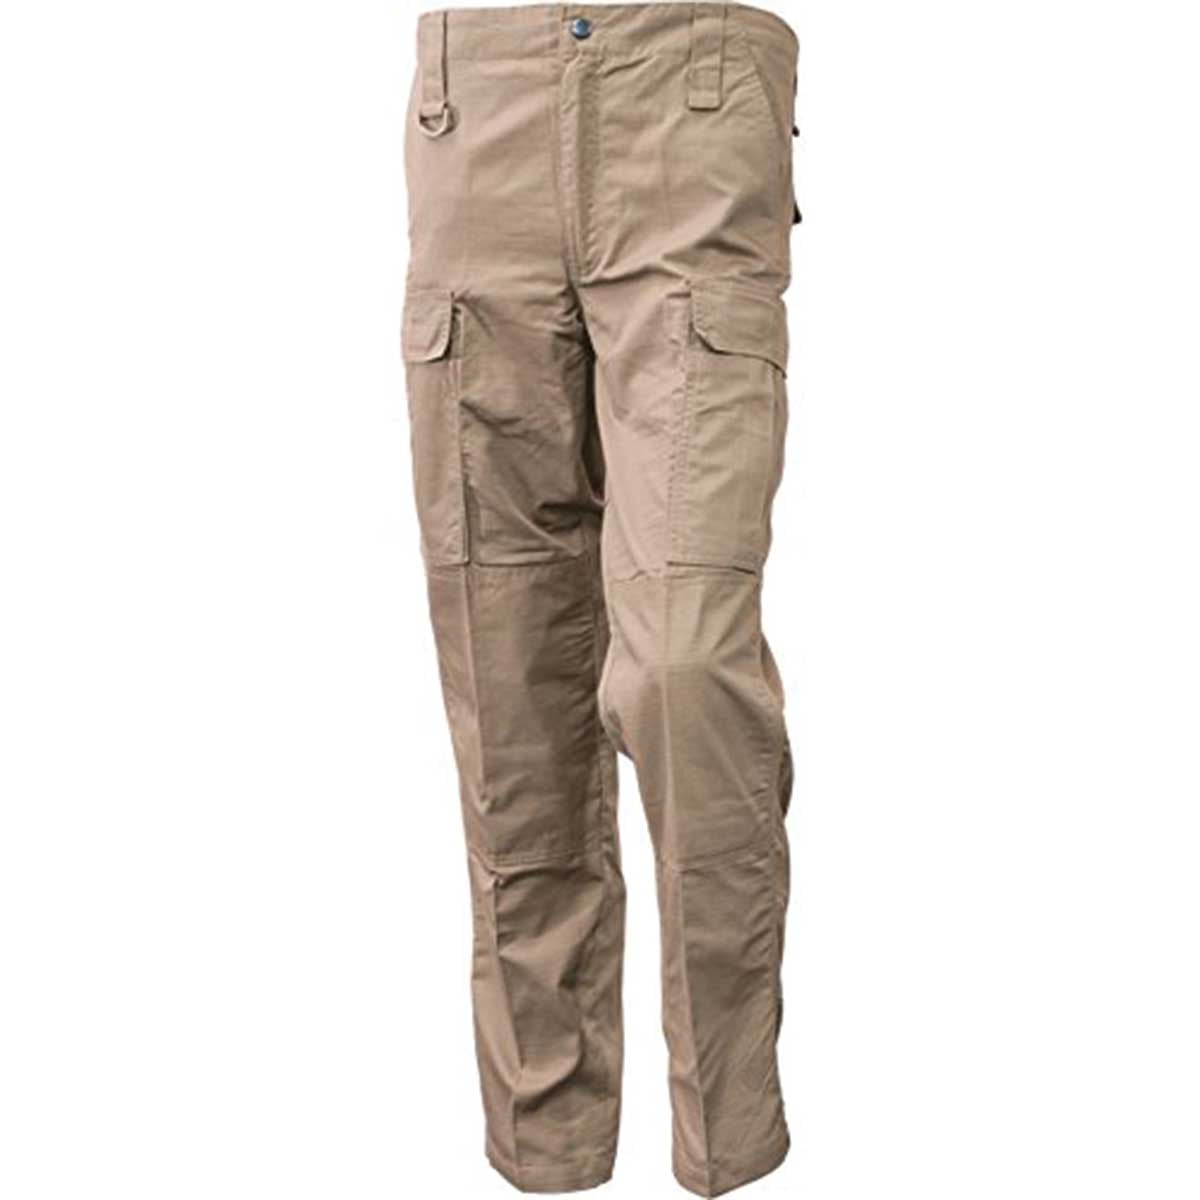 Tippmann Tactical TDU Pants Tan, LG - Walmart.com